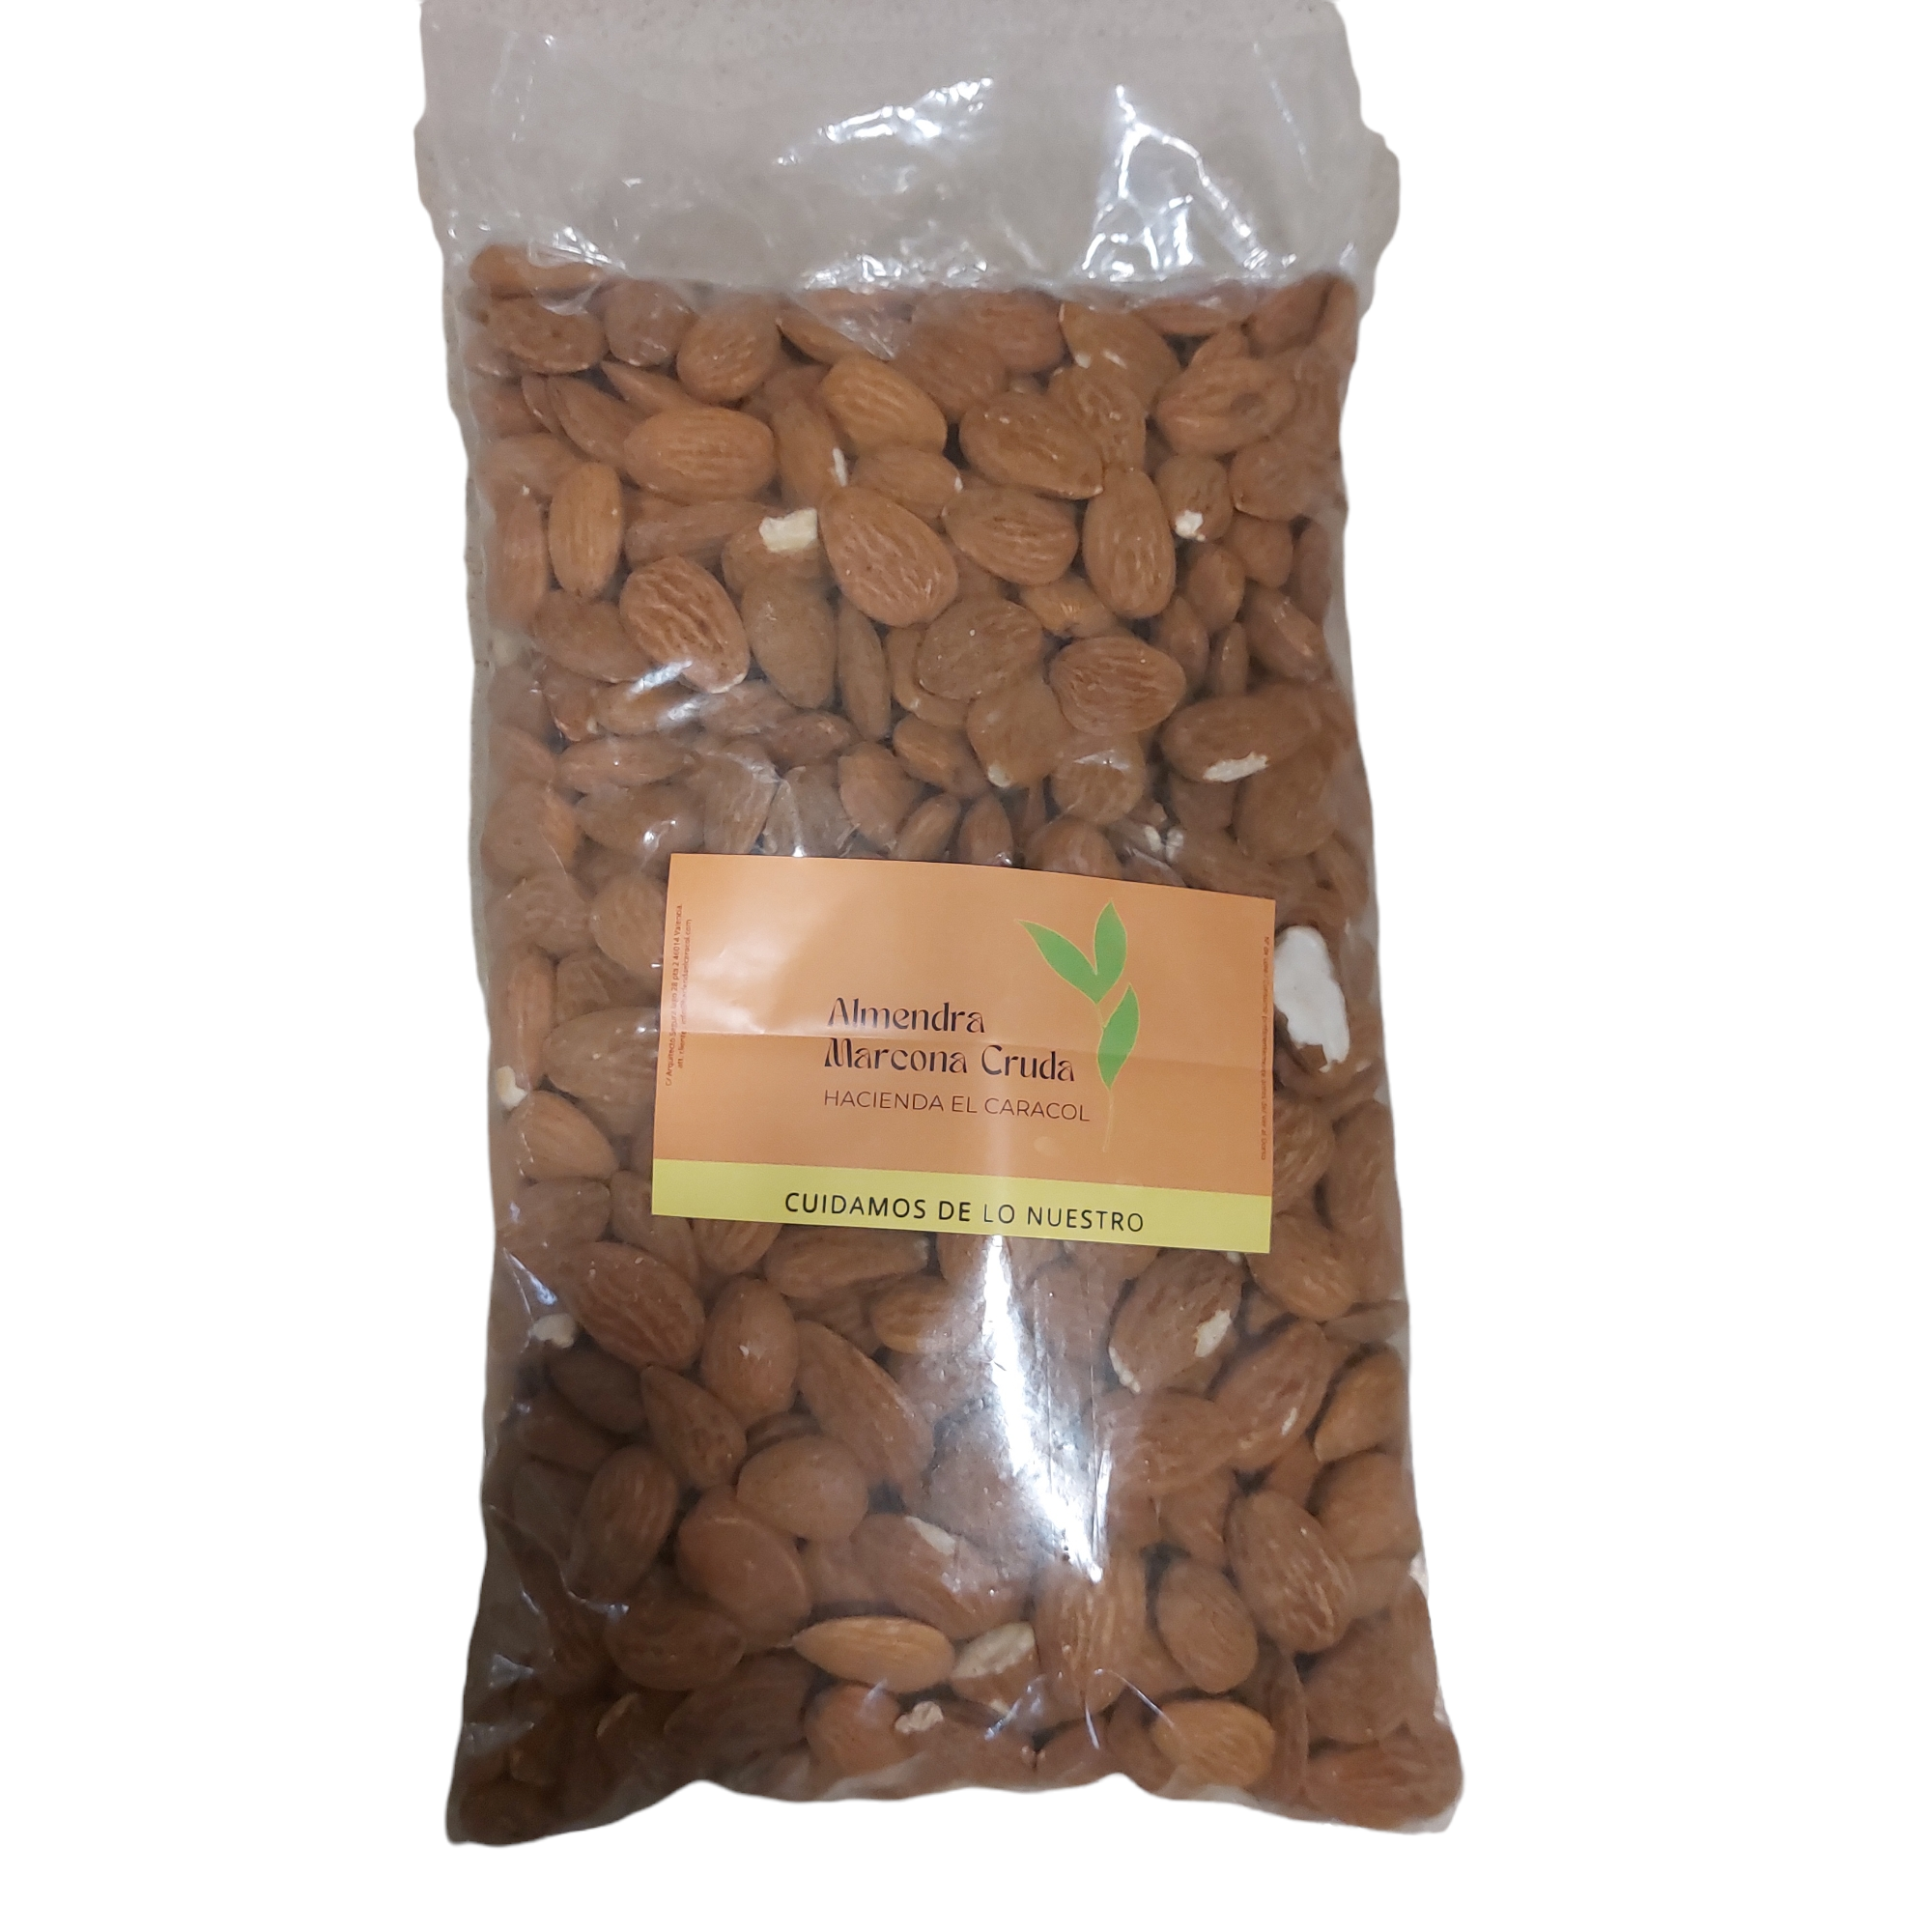 Marcona Almond bag of 400 grams